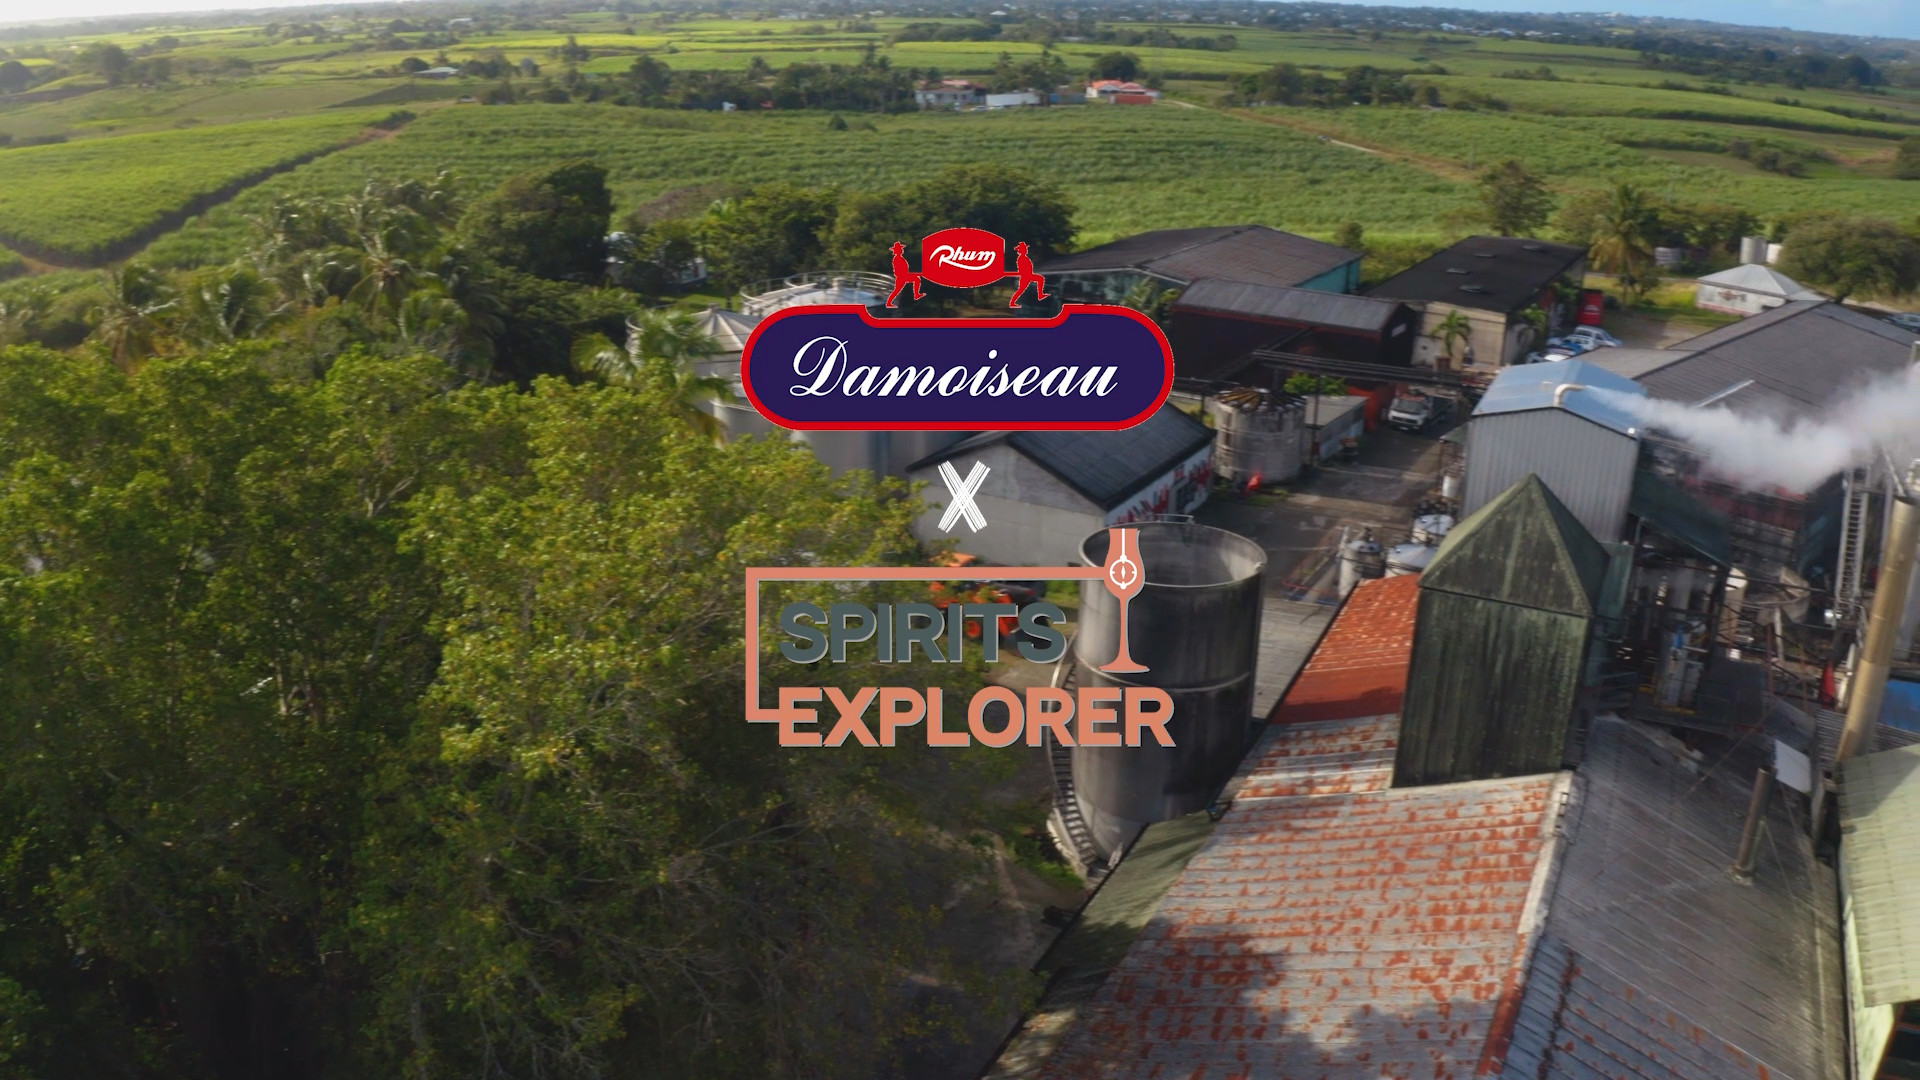 Spirits Explorer in Guadeloupe Episode 4 – Damoiseau Rums